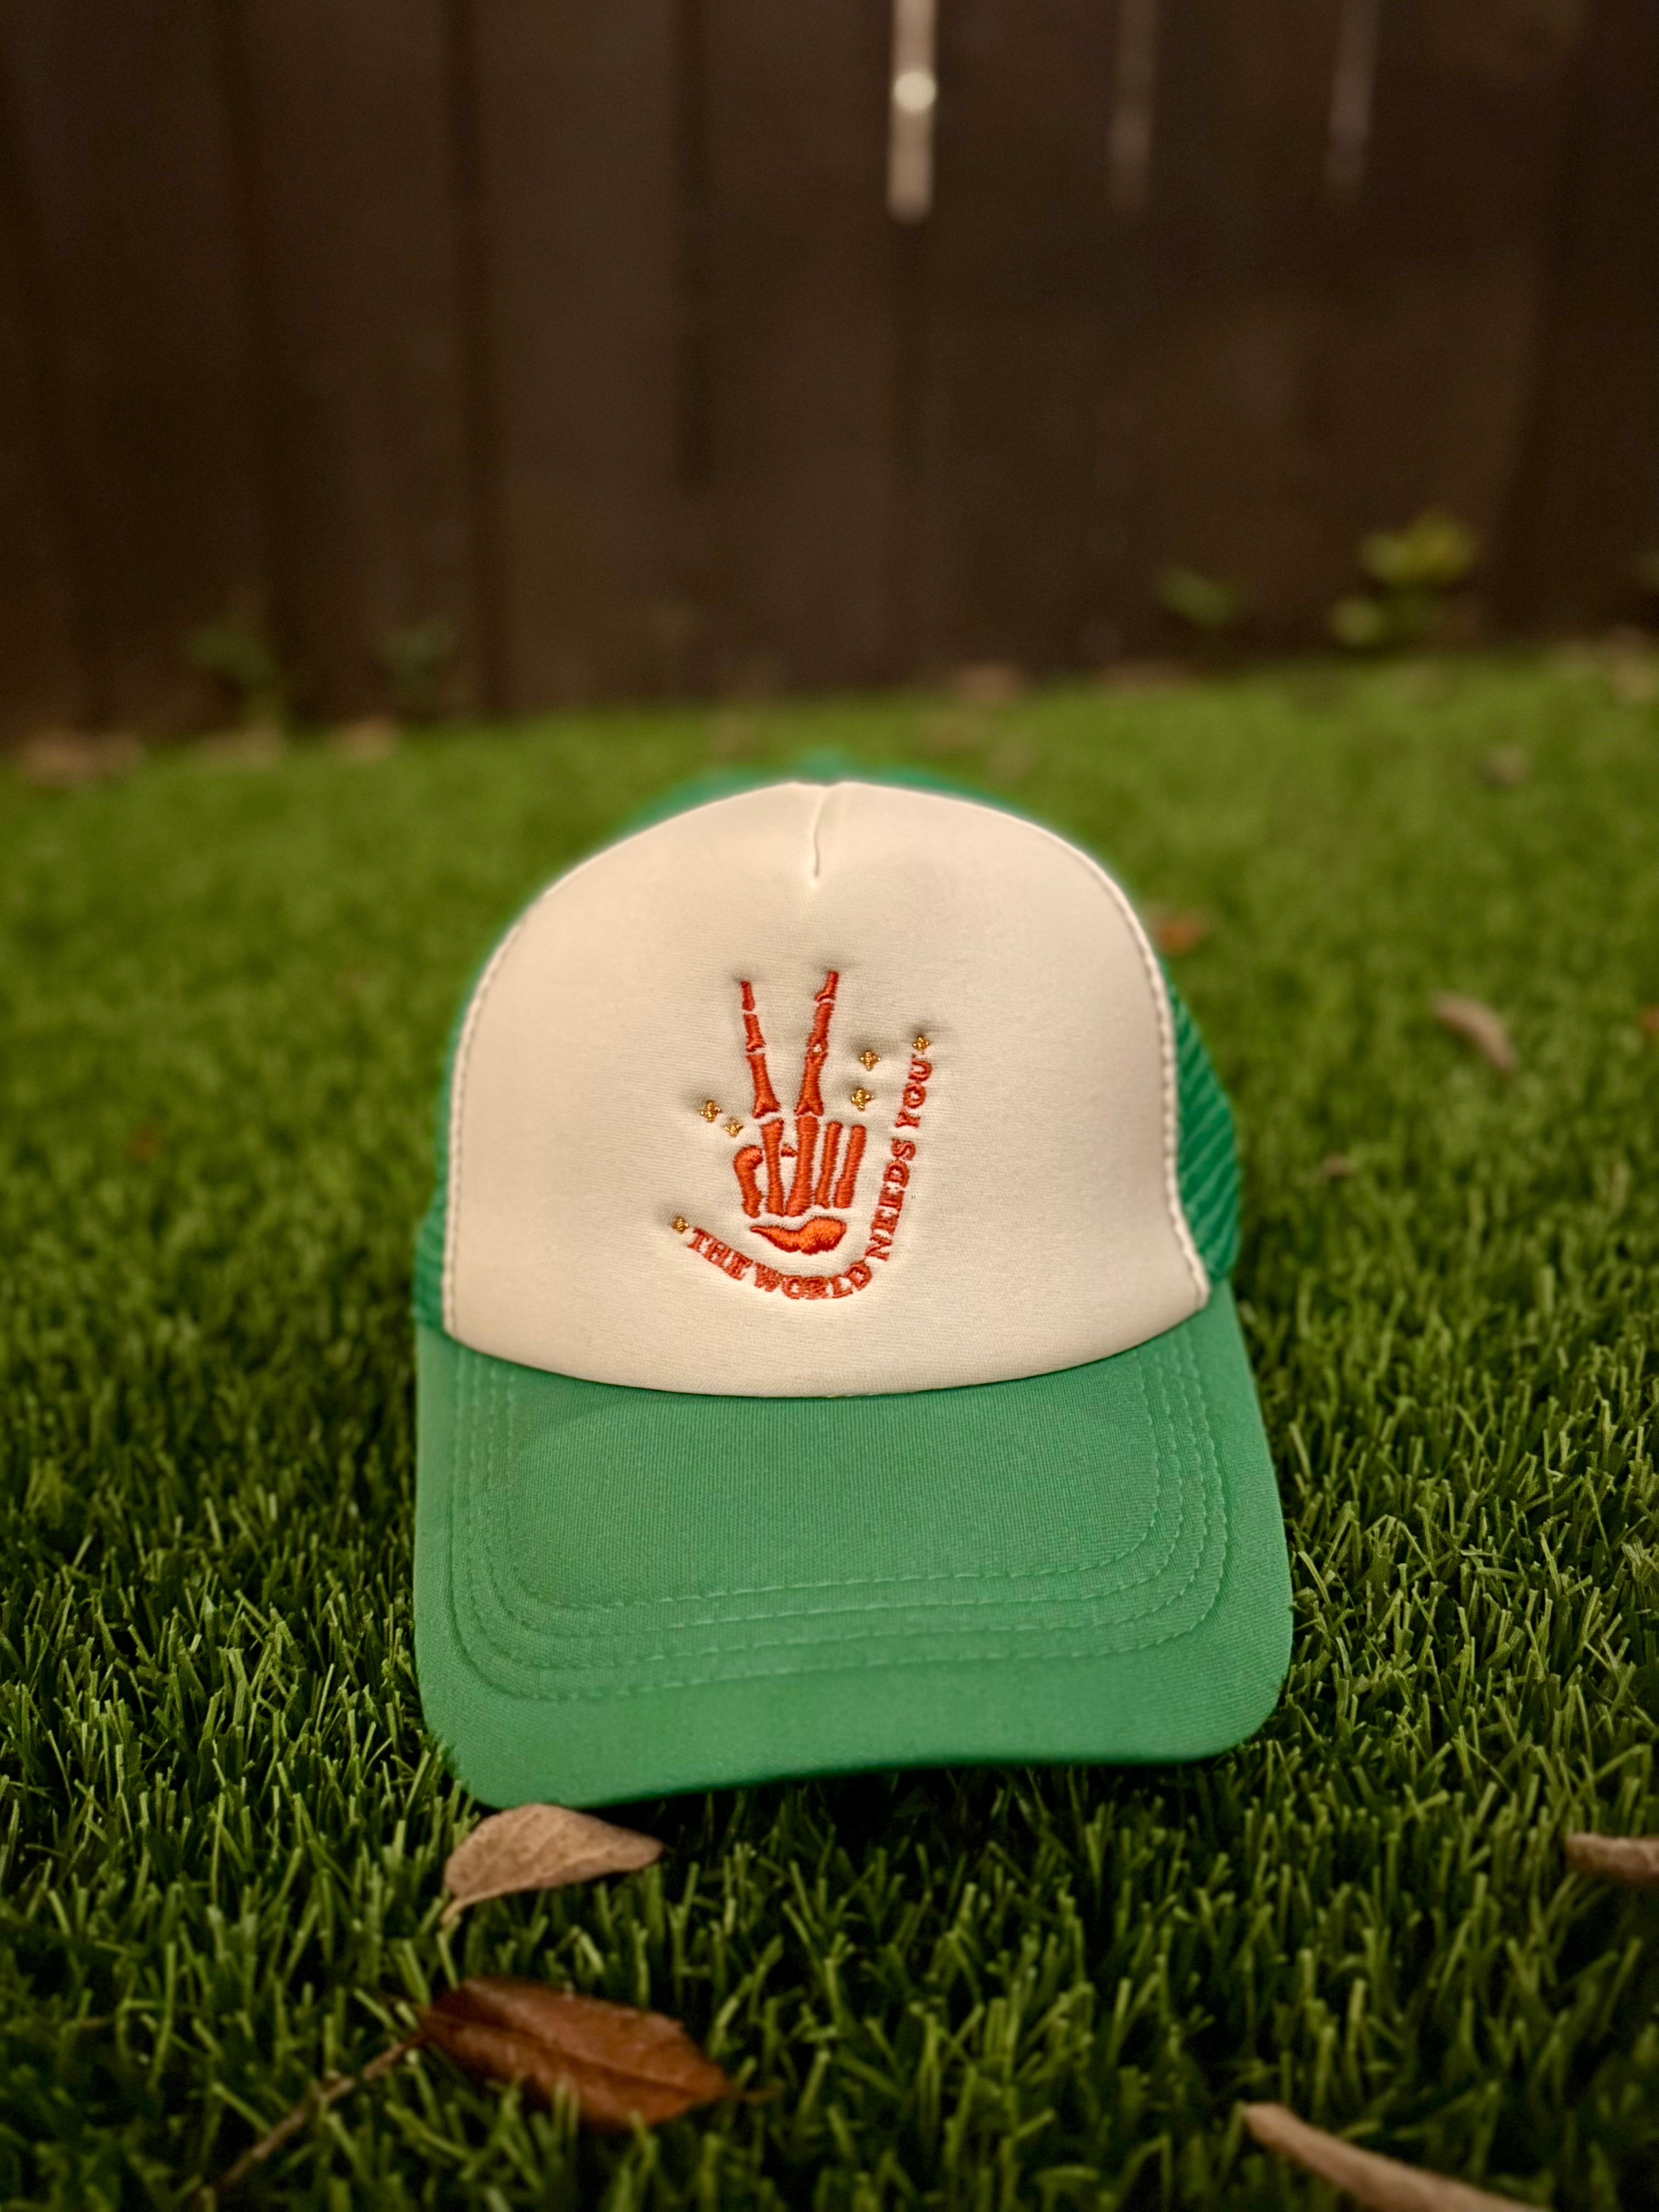 Self Love Club - Green/White Trucker Hat